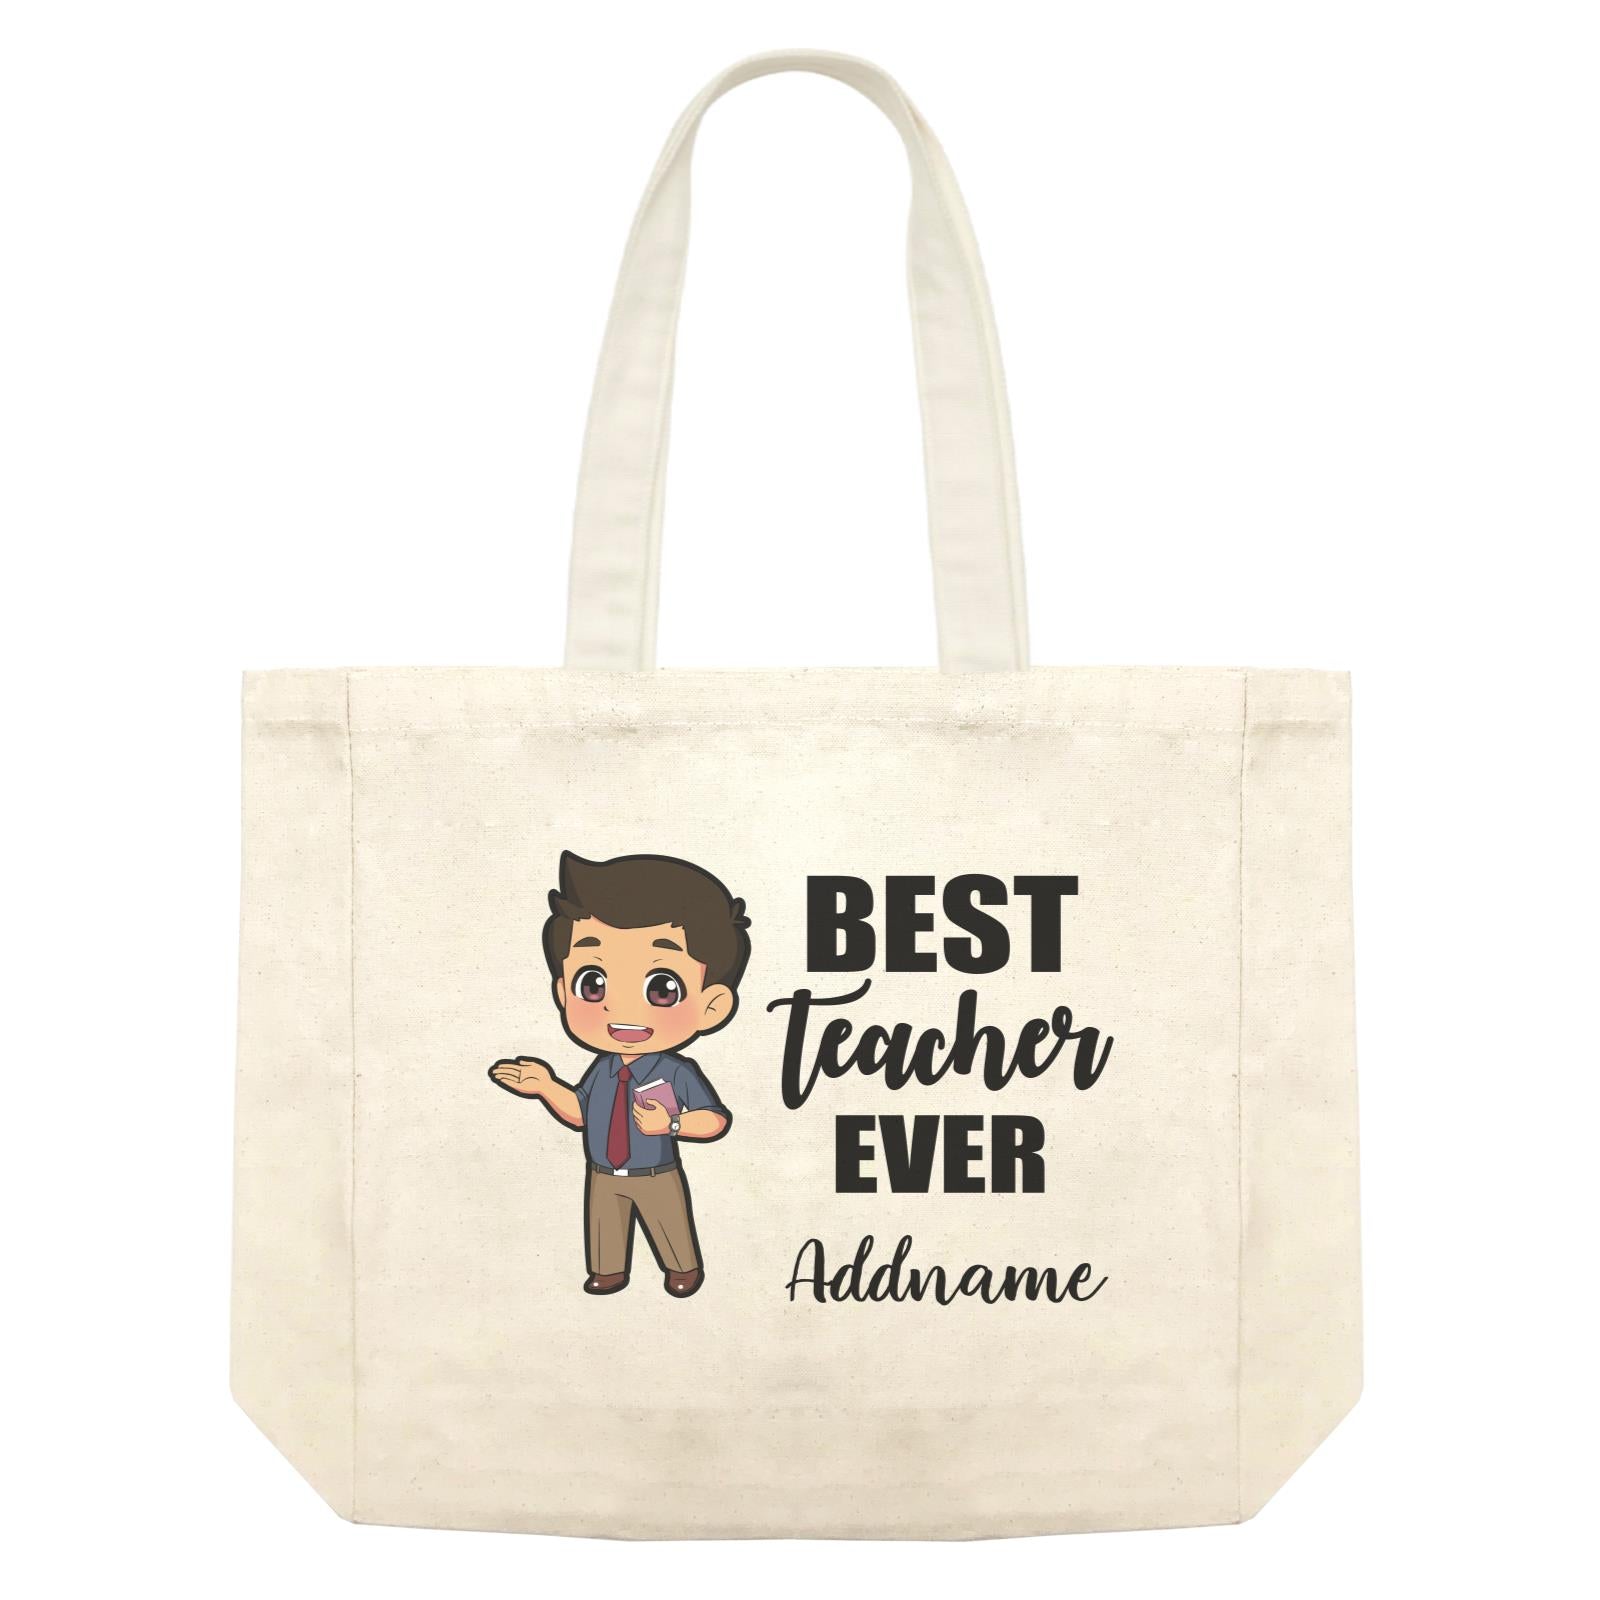 Chibi Teachers Malay Man Best Teacher Ever Addname Shopping Bag